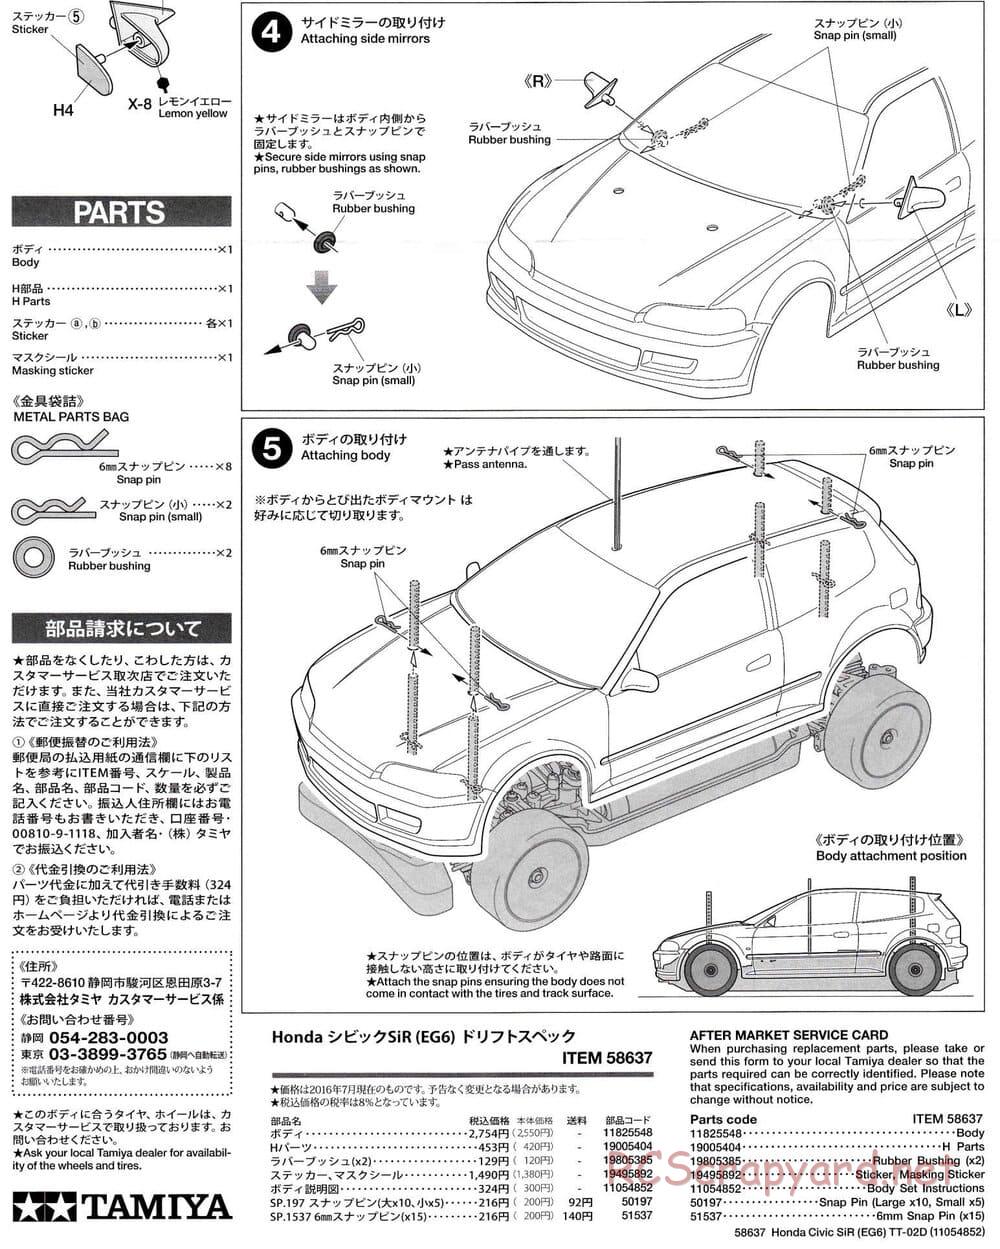 Tamiya - Honda Civic SiR (EG6) - Drift Spec - TT-02D Chassis - Body Manual - Page 4